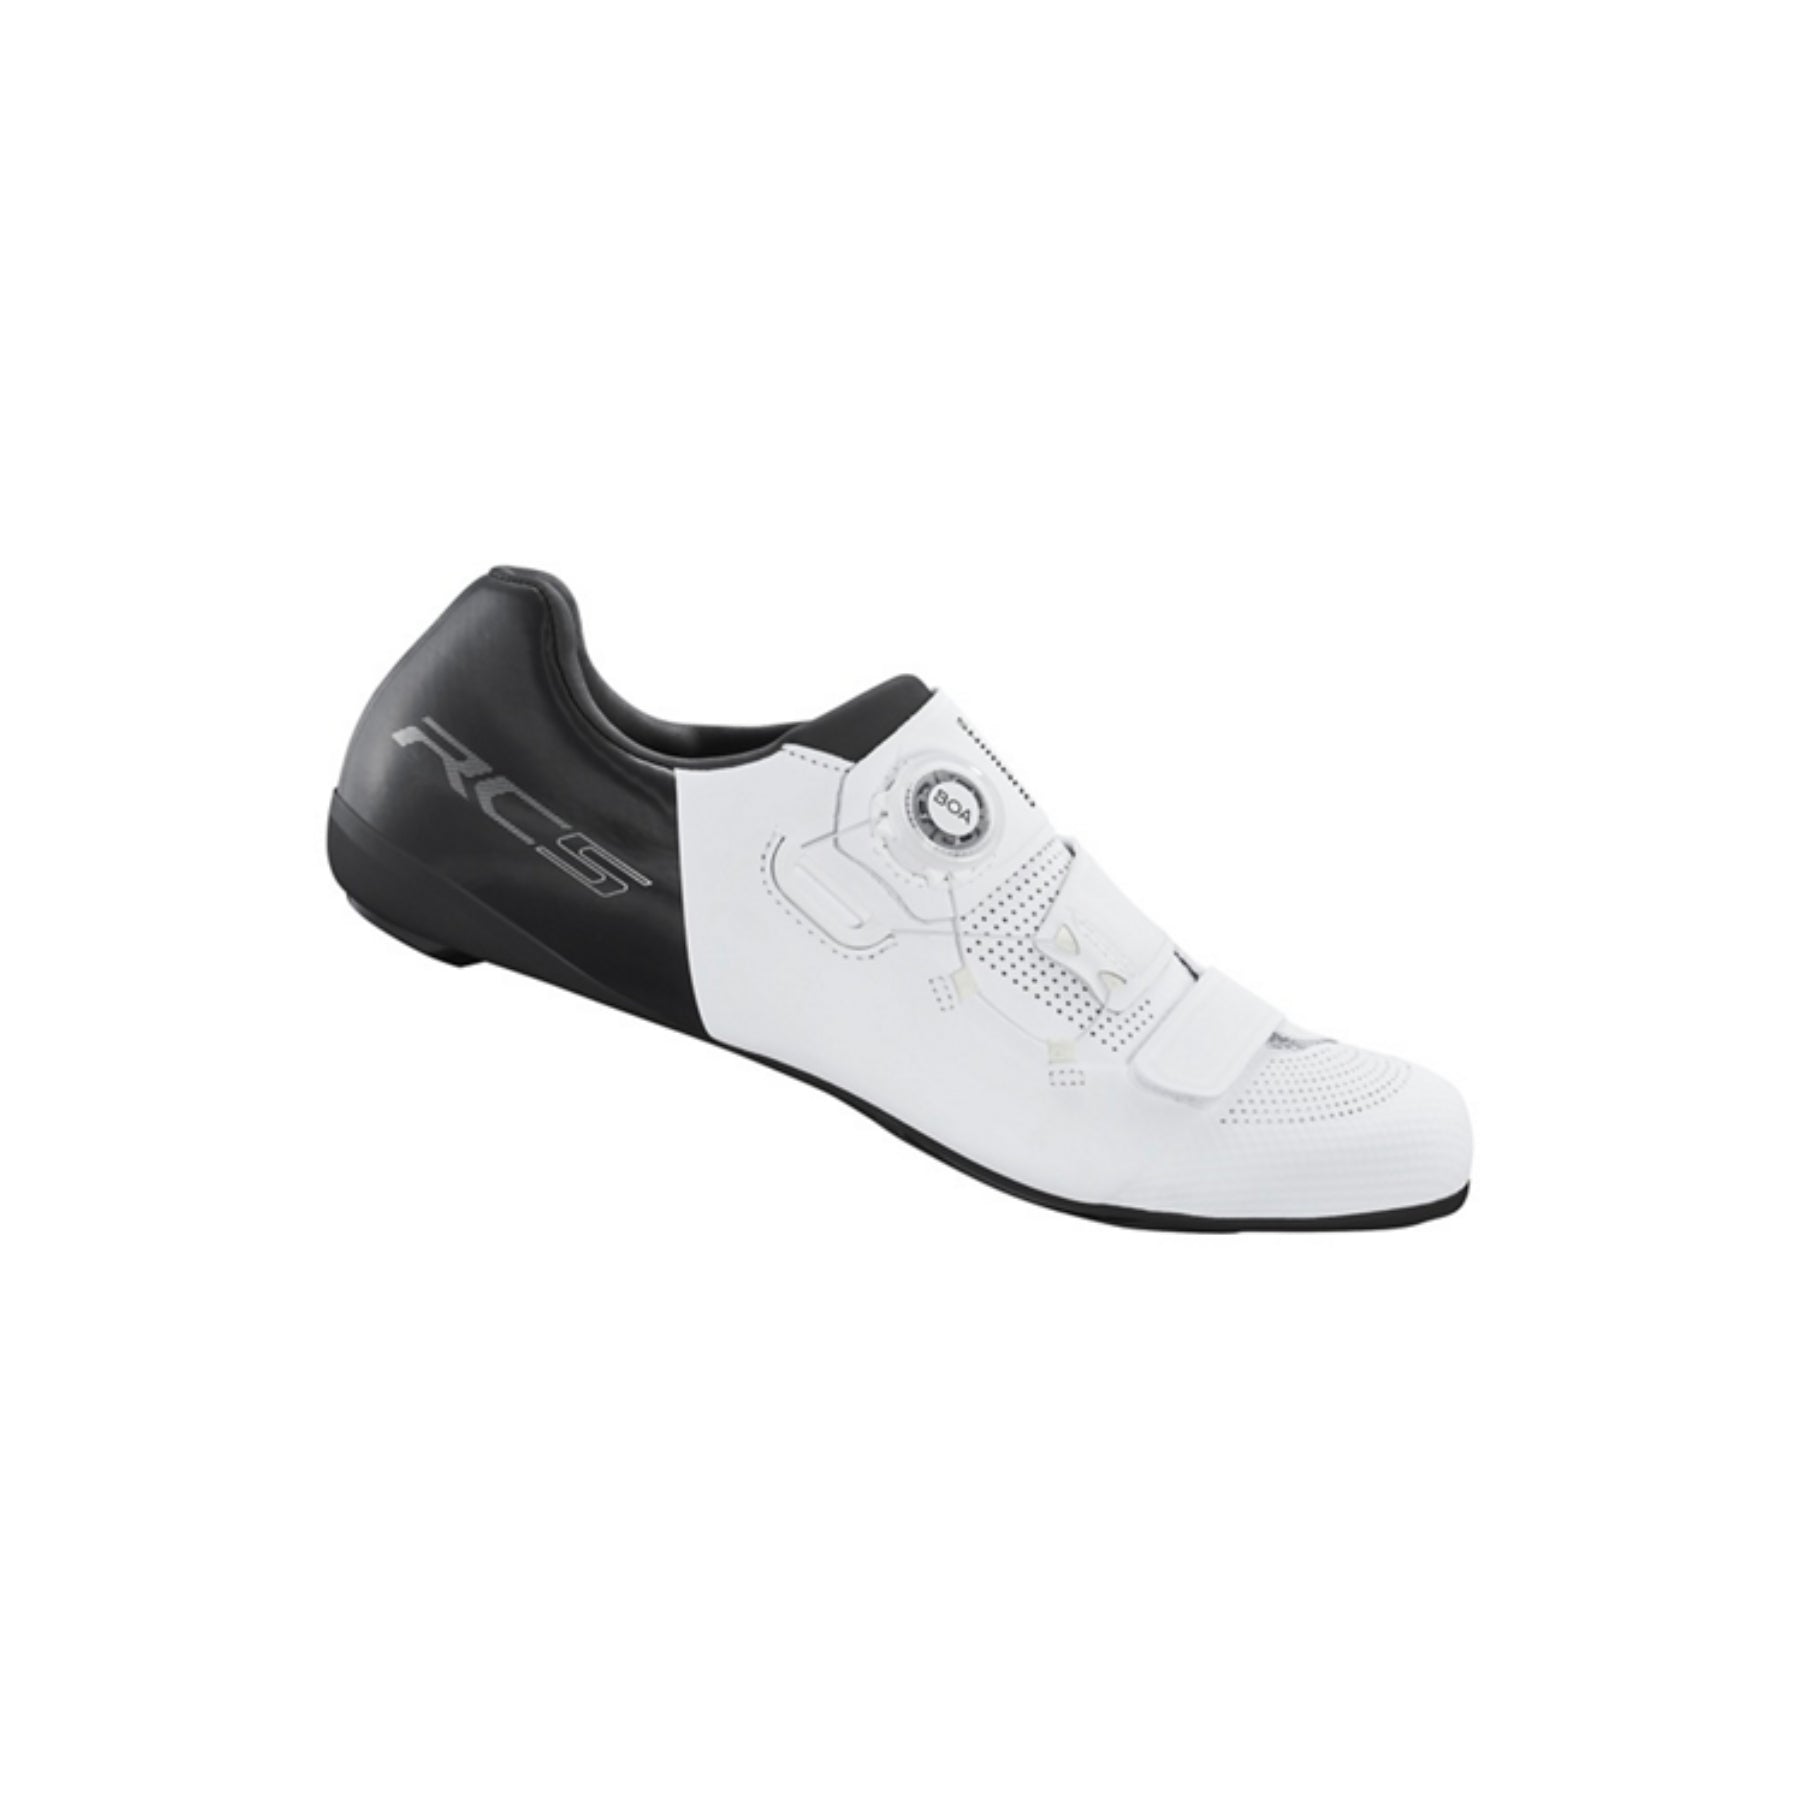 Zapatillas Shimano Rc502 White